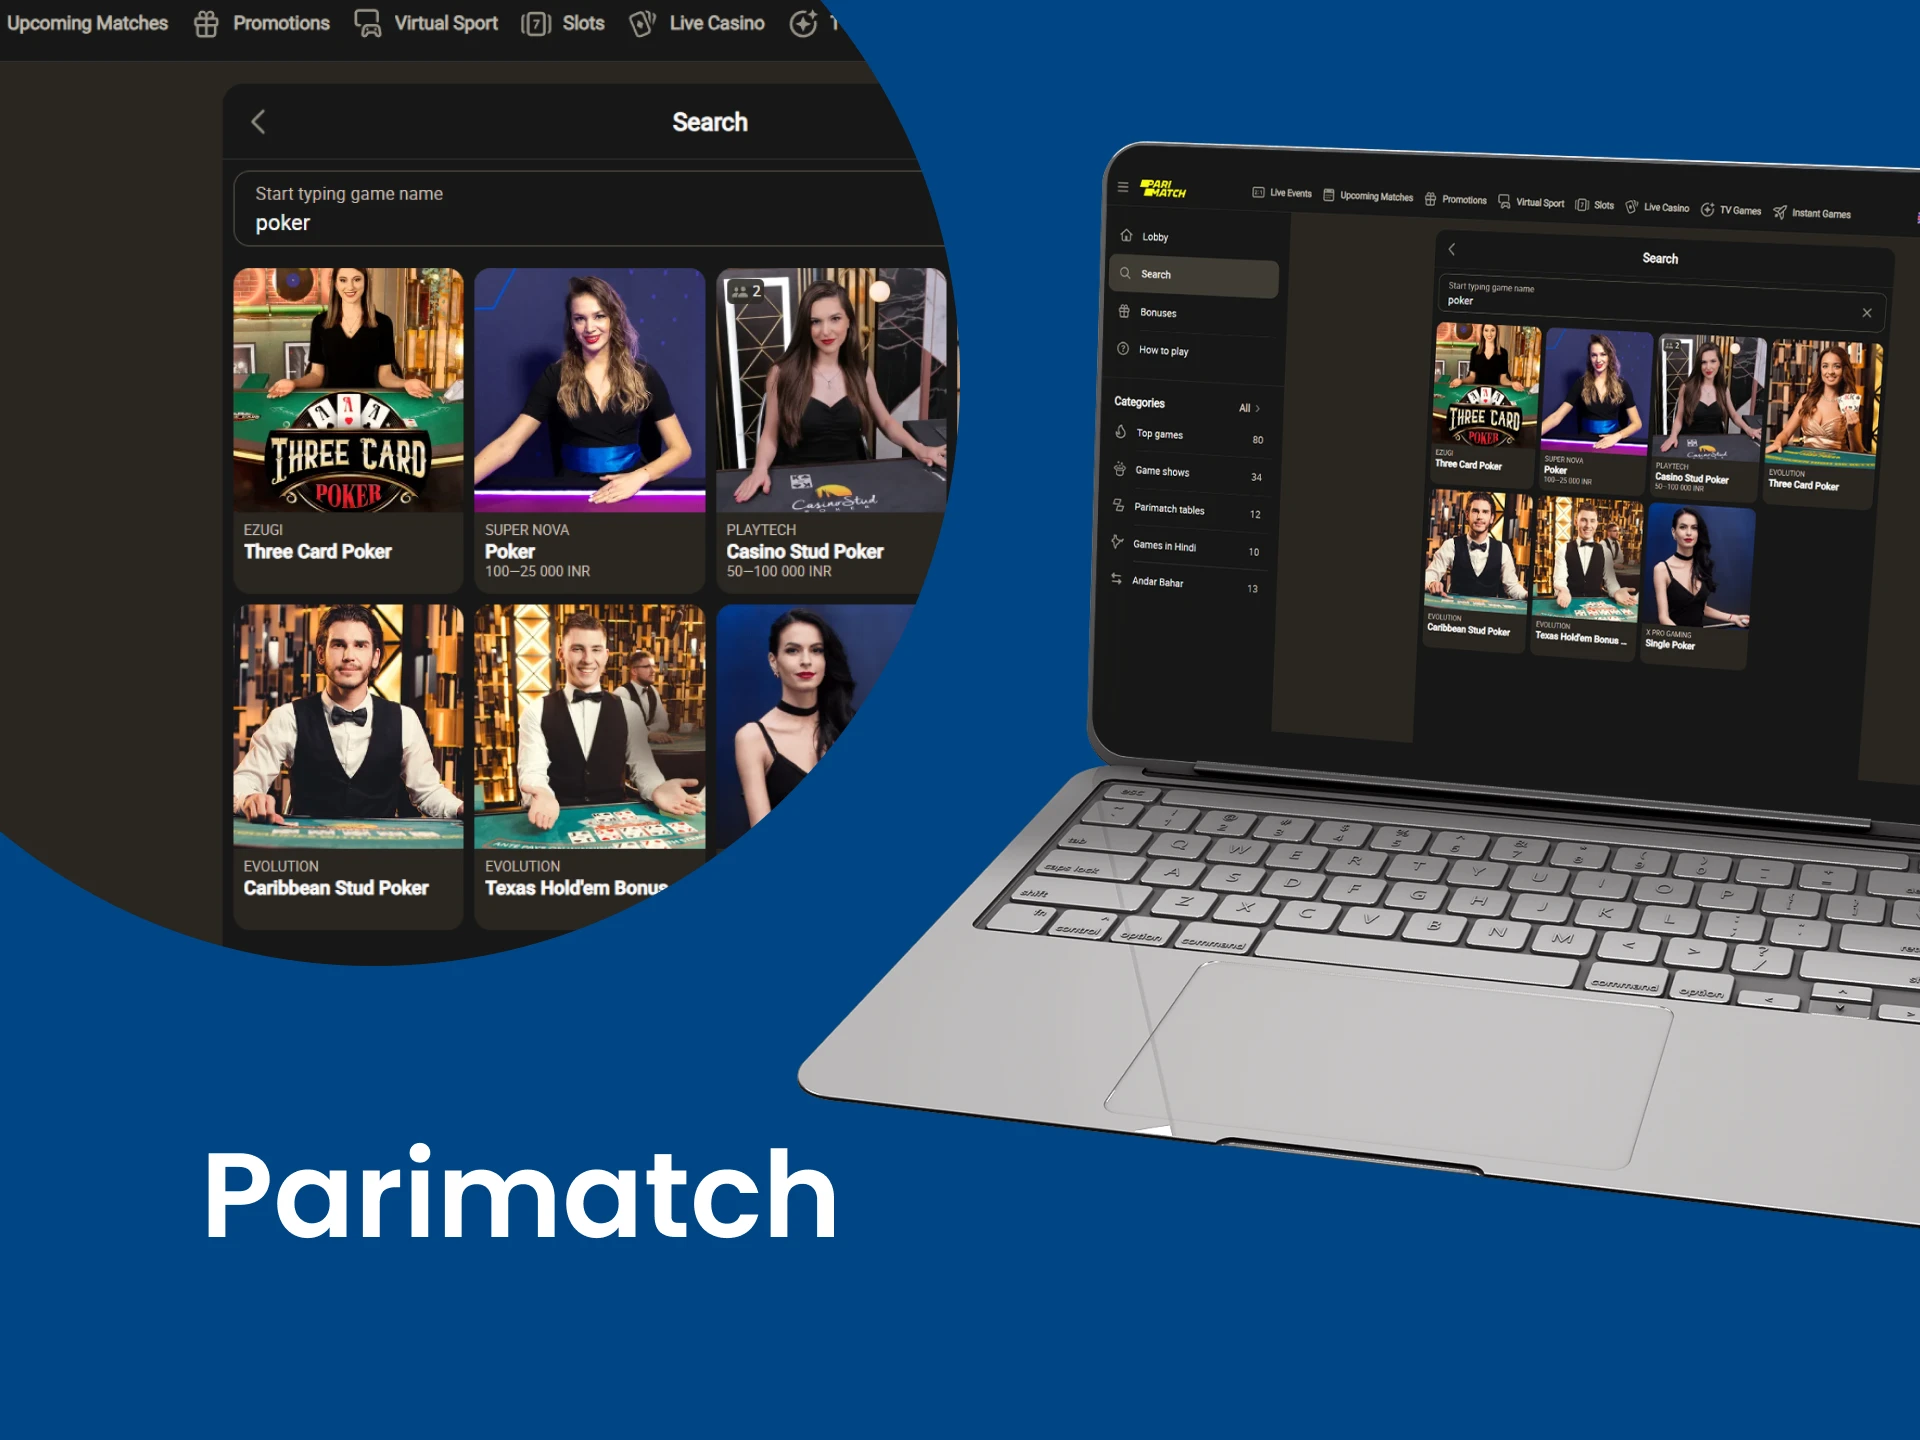 Play Video Poker on the Parimatch service.